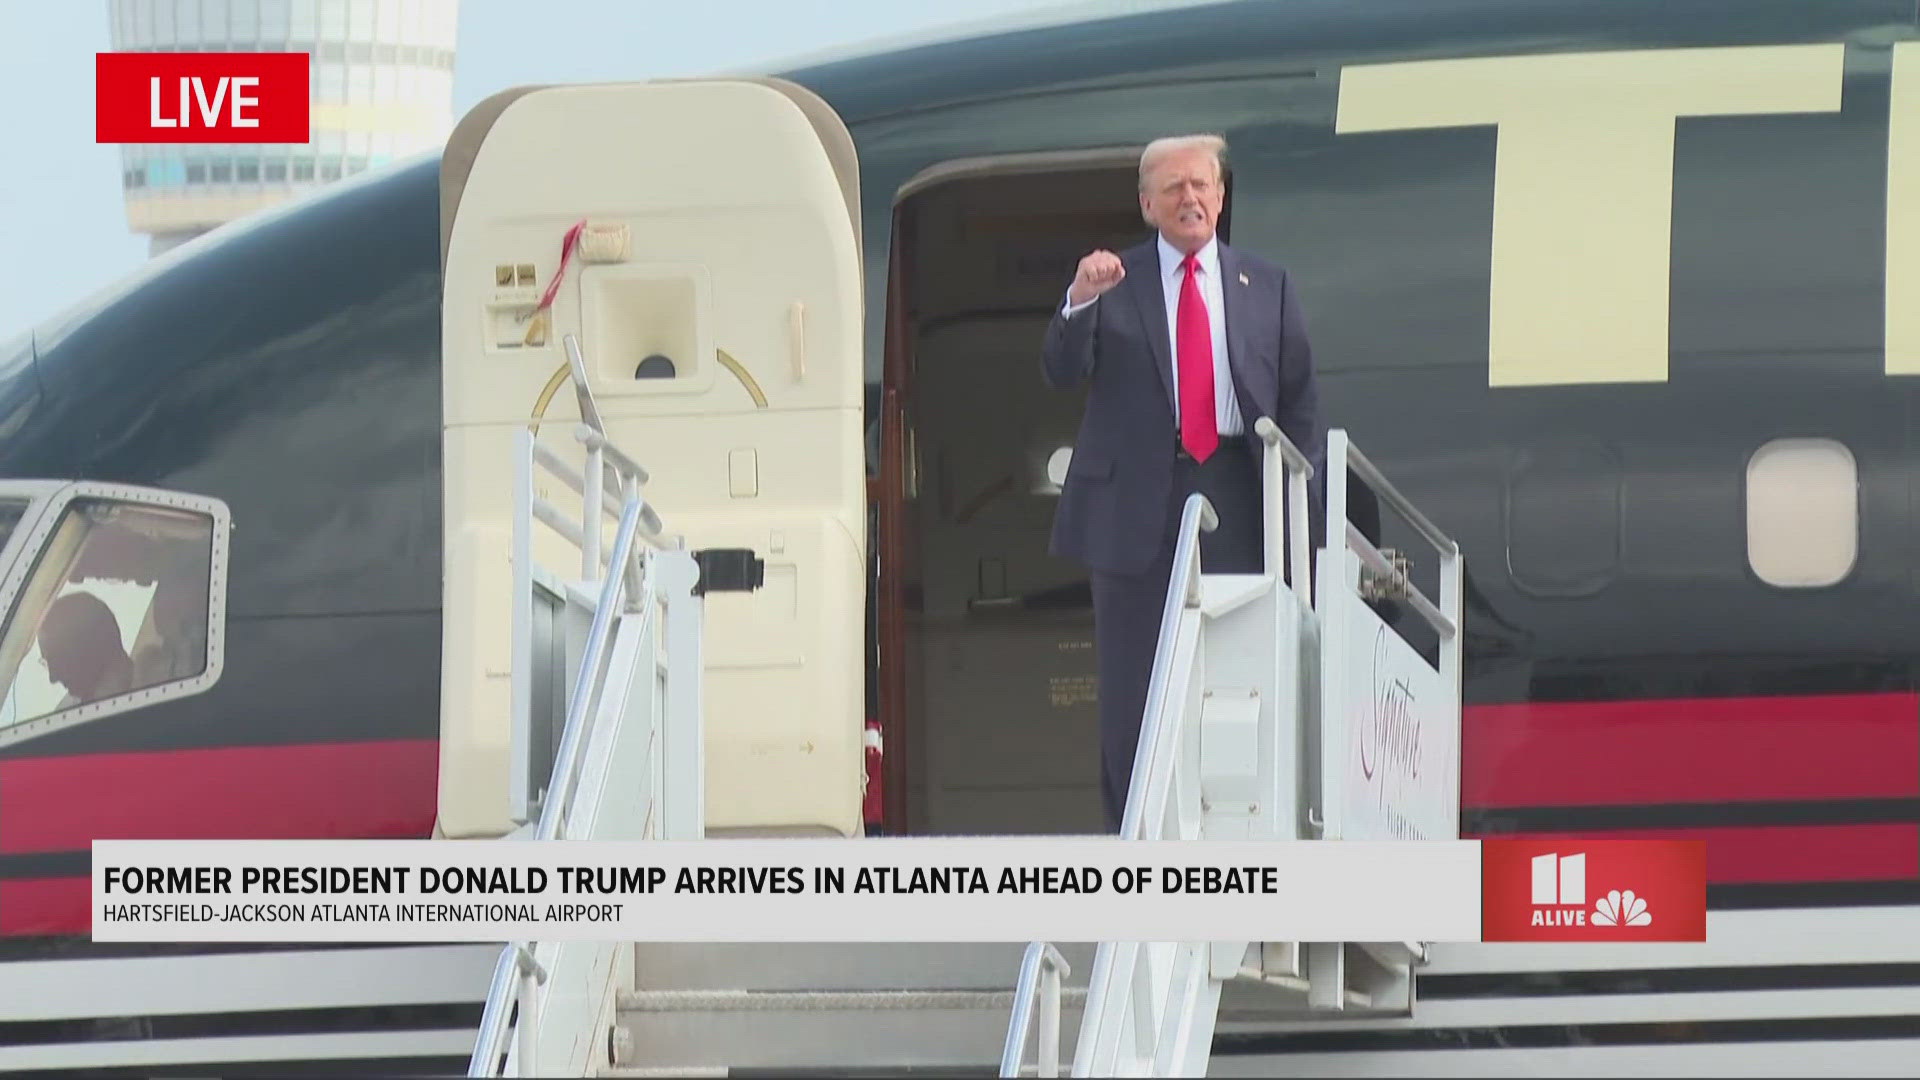 Trump waved to the crowd after getting off "Trump Force One" as he prepares for his debate against Joe Biden in Atlanta.